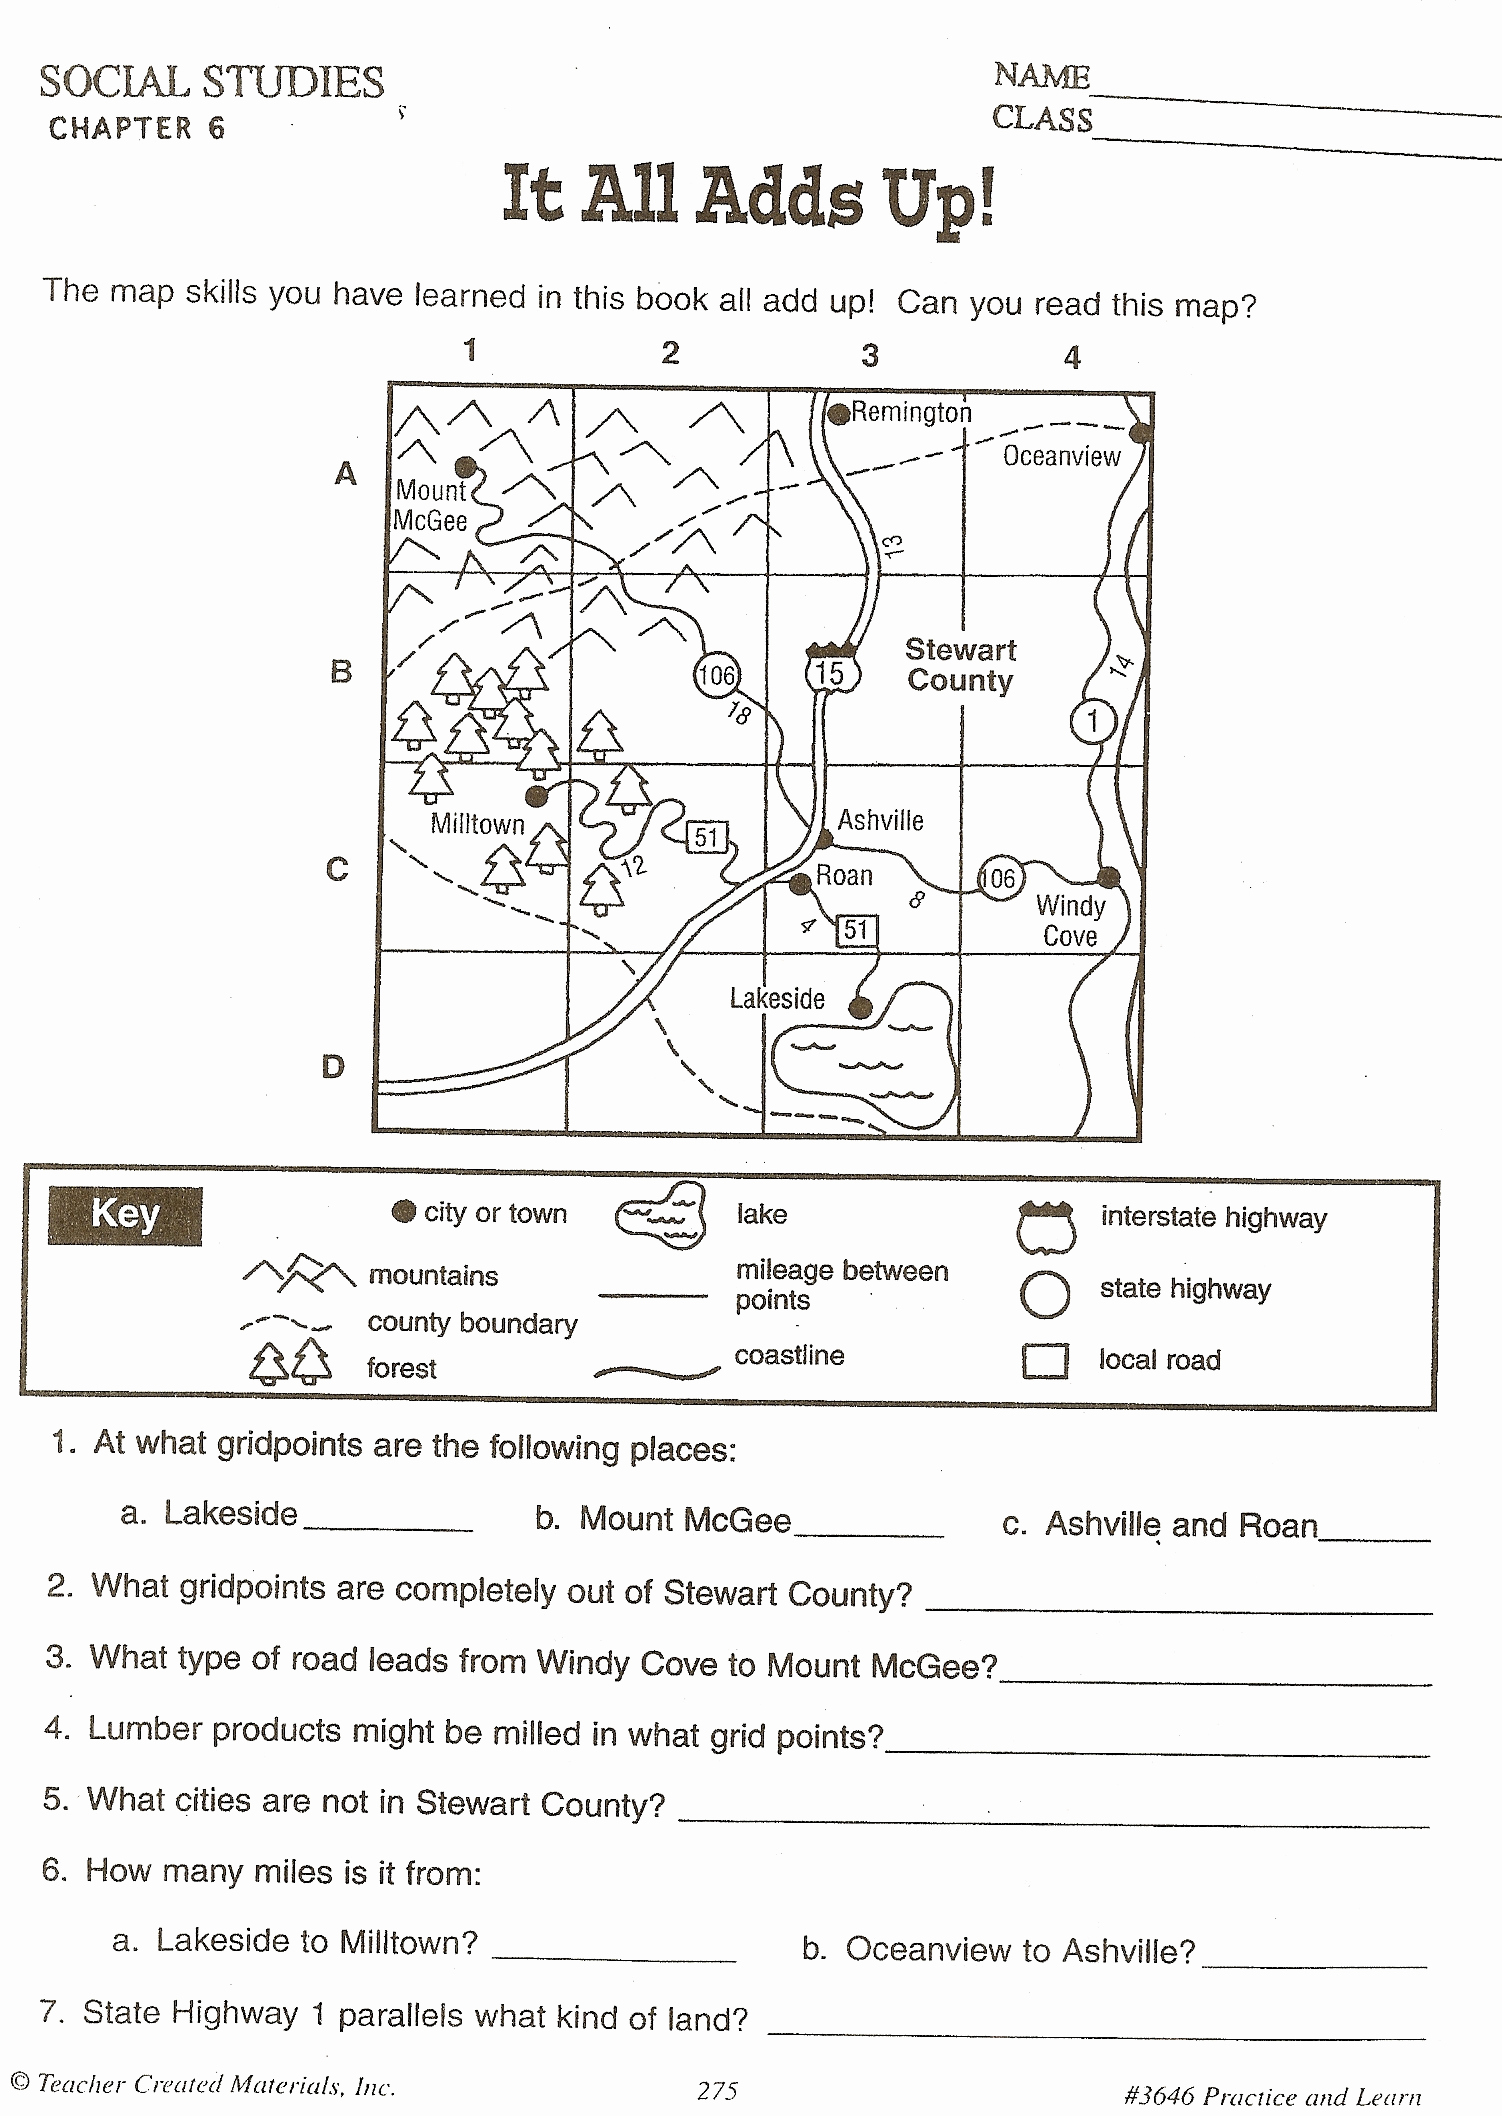 Map Scale Worksheet 4th Grade Beautiful 20 Map Scale Worksheet 4th Grade